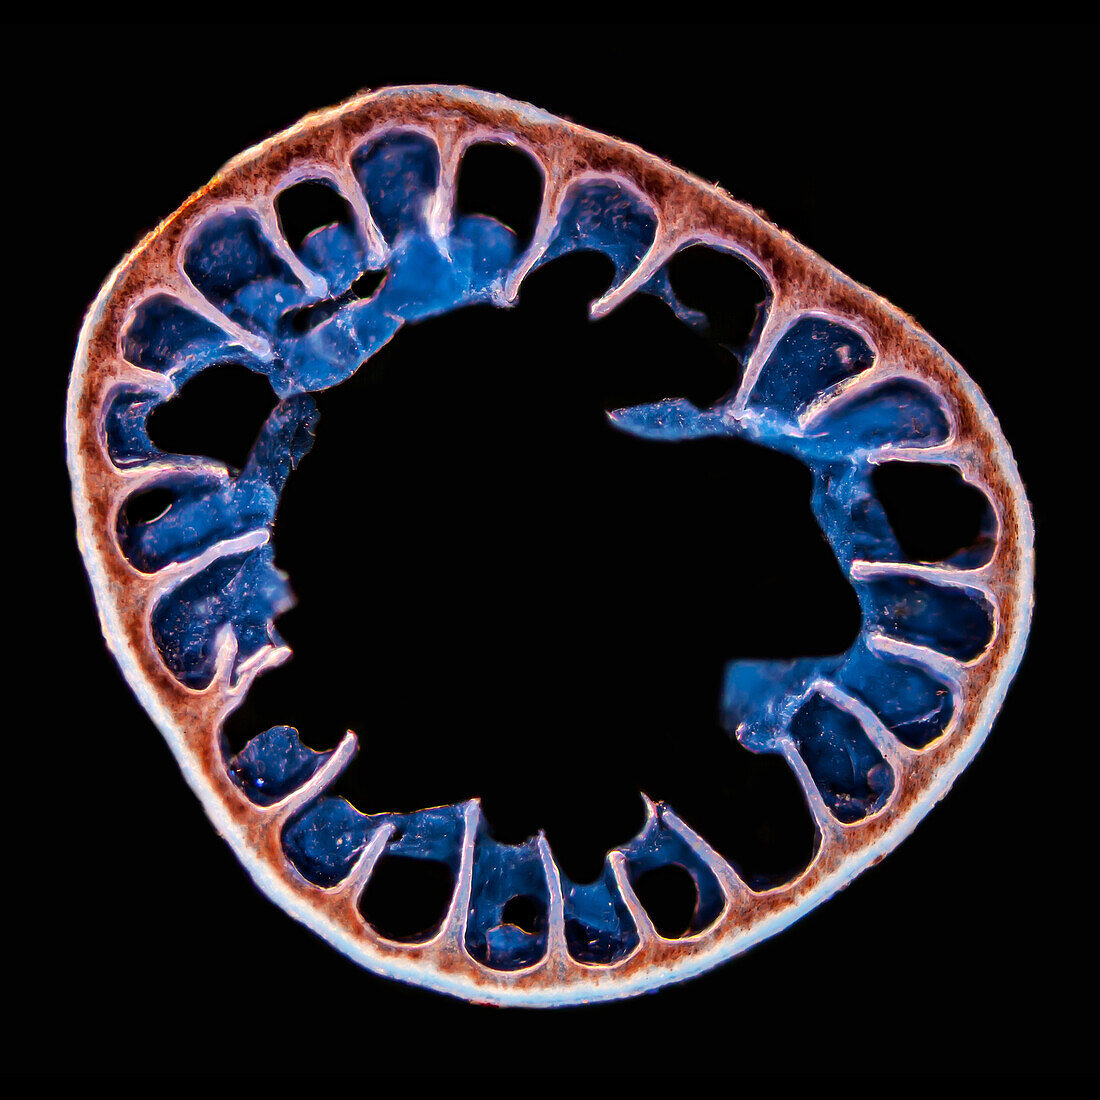 Hedgehog spine, light micrograph